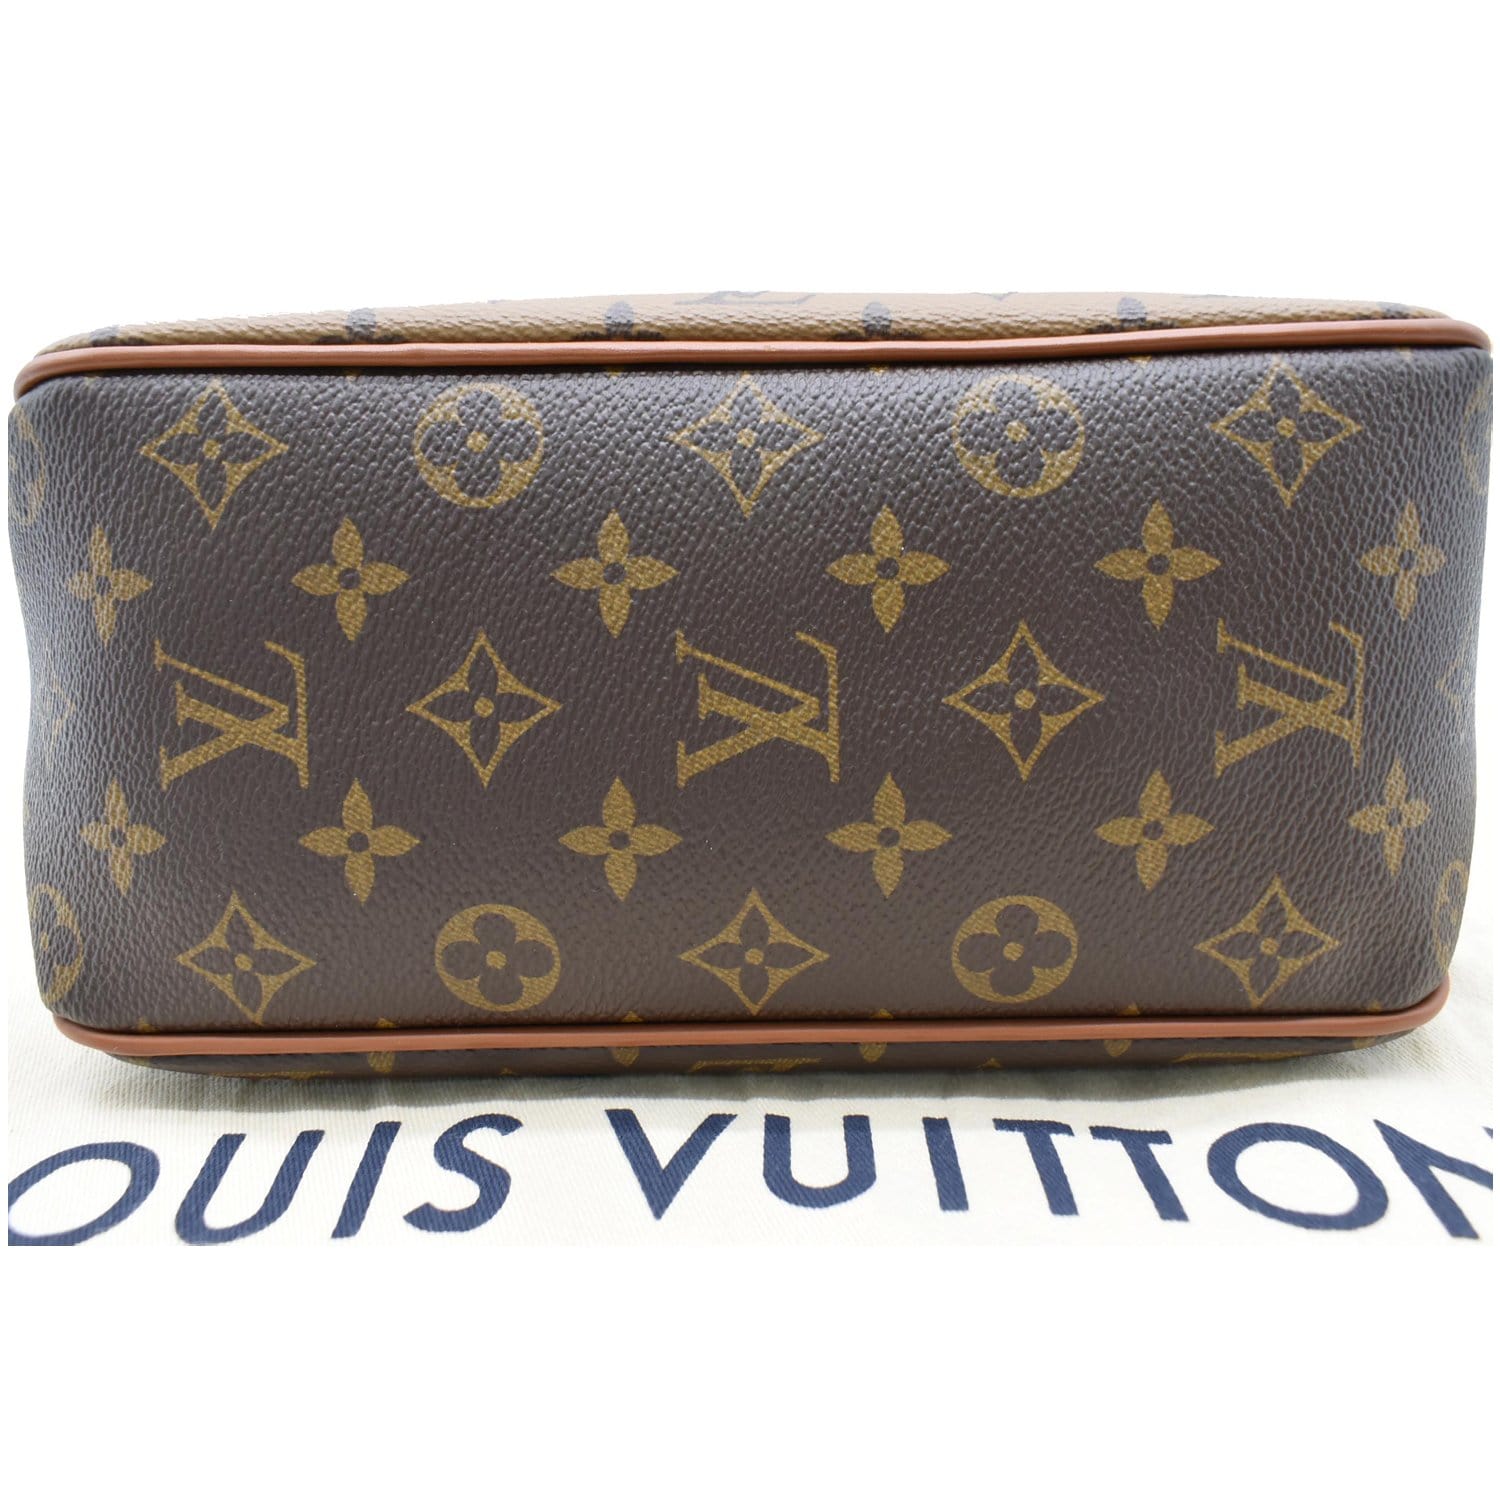 Louis Vuitton Reverse Monogram Dauphine Hobo Pm 575348